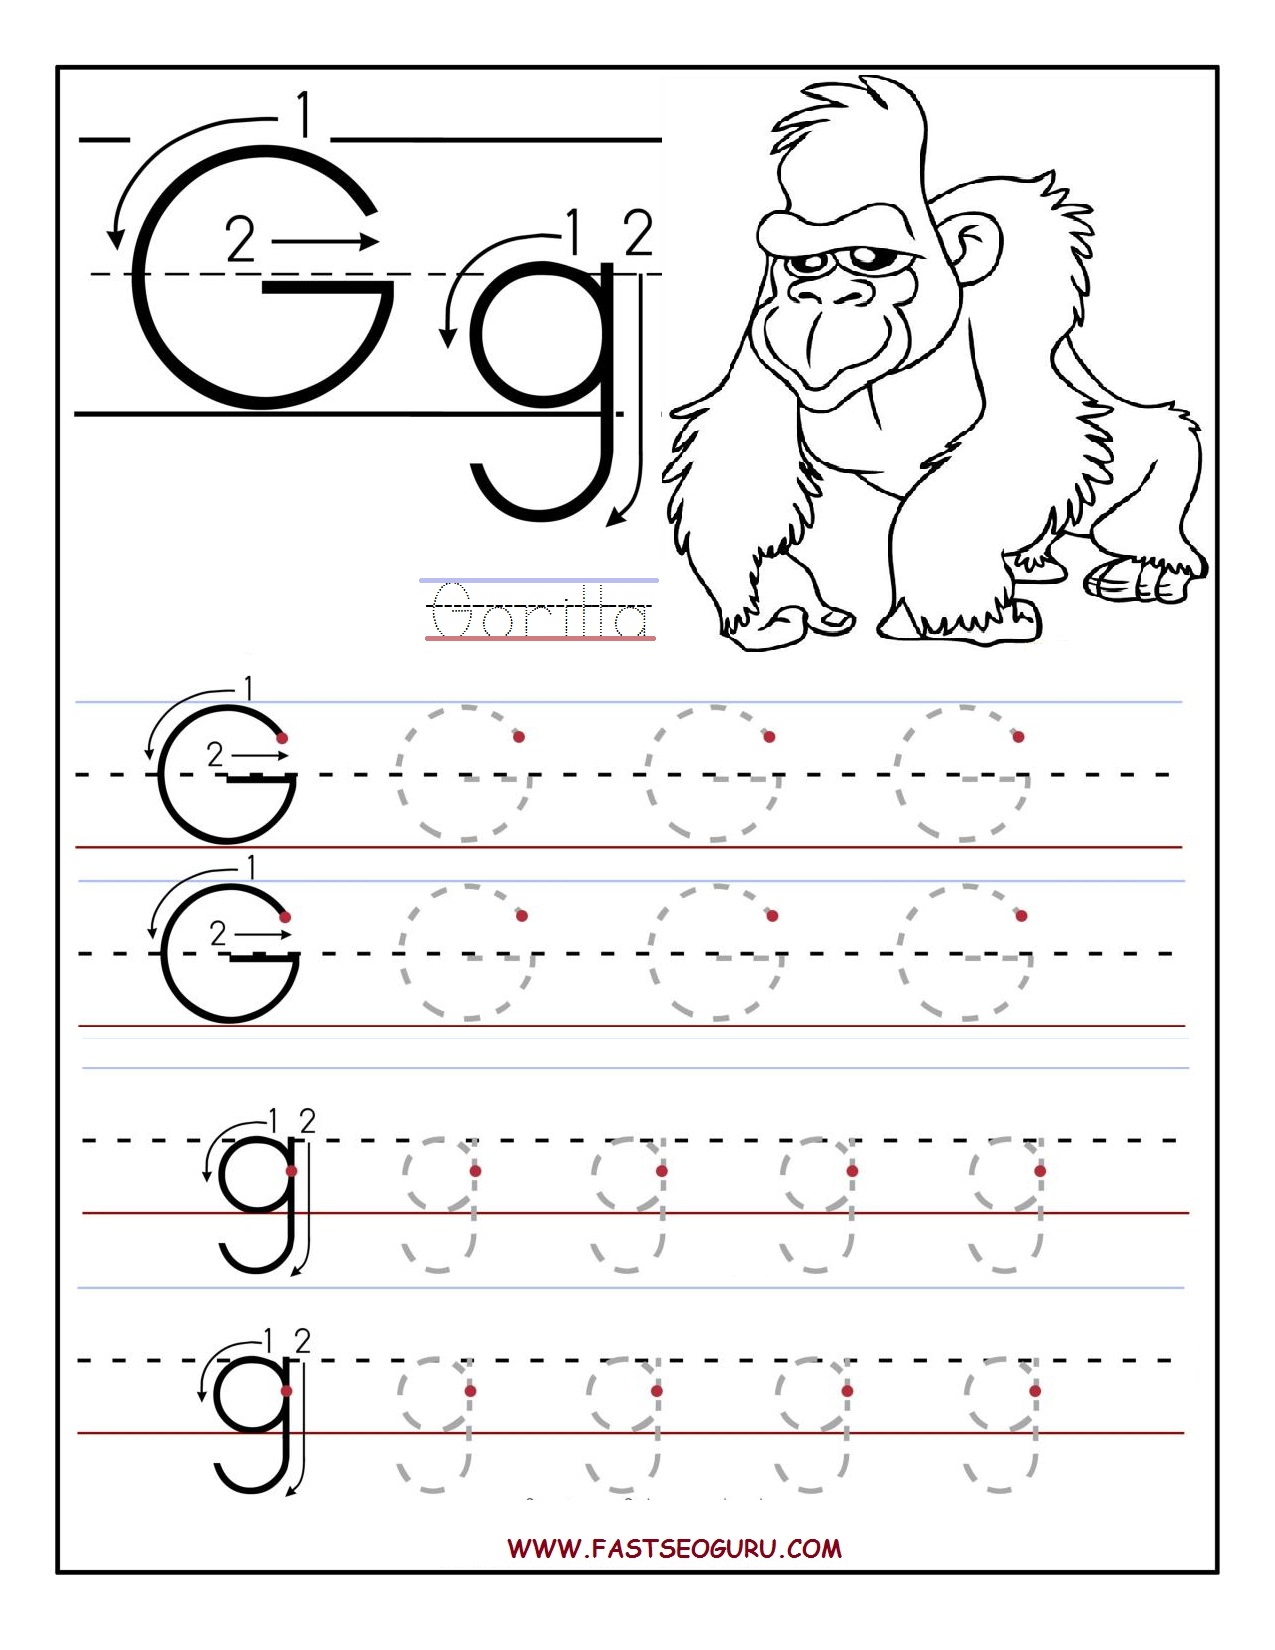 printable-letter-g-tracing-worksheets-for-preschool